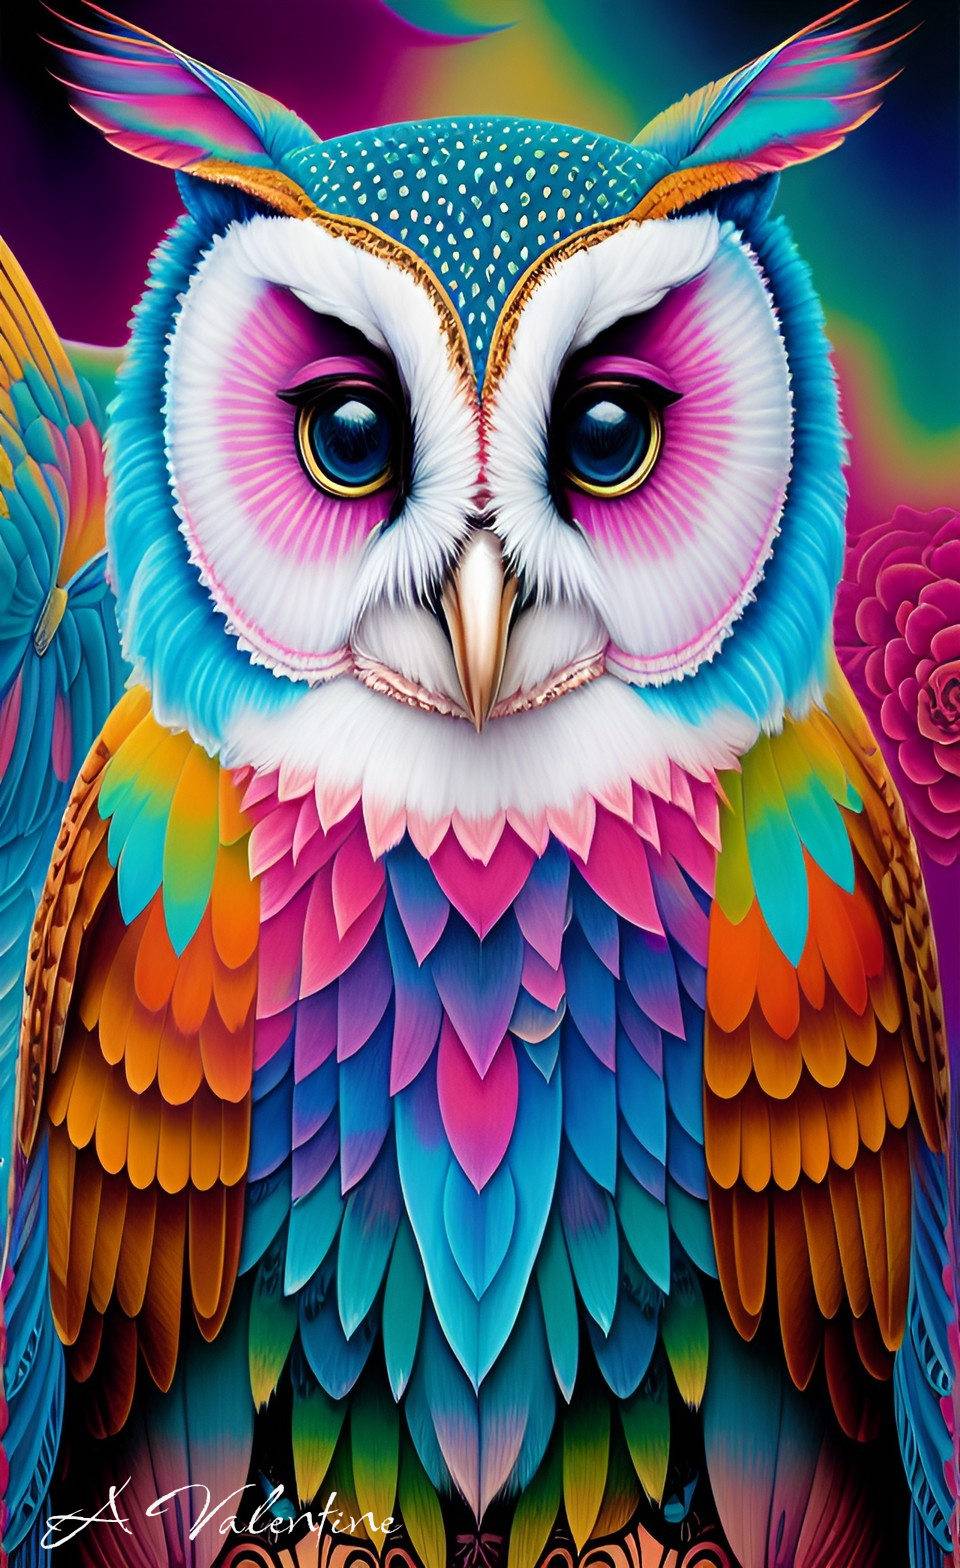 Lisa Frank Inspired Series) Owl by LadyValsArt1983 on DeviantArt